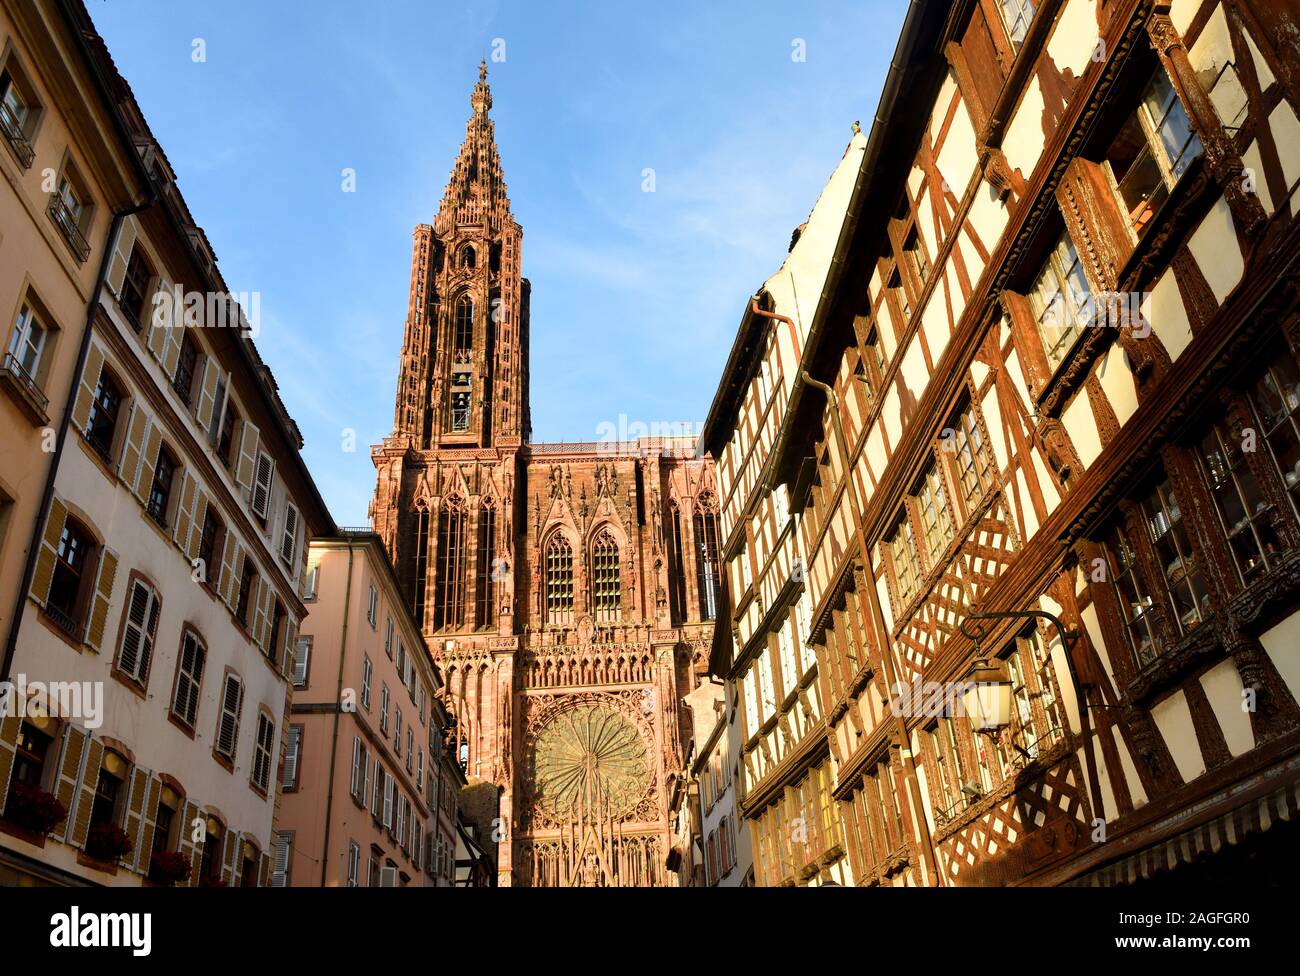 La cathédrale de Strasbourg ou la cathédrale de Notre-Dame de Strasbourg (Cathédrale Notre-Dame de Strasbourg) à Strasbourg, France. Banque D'Images